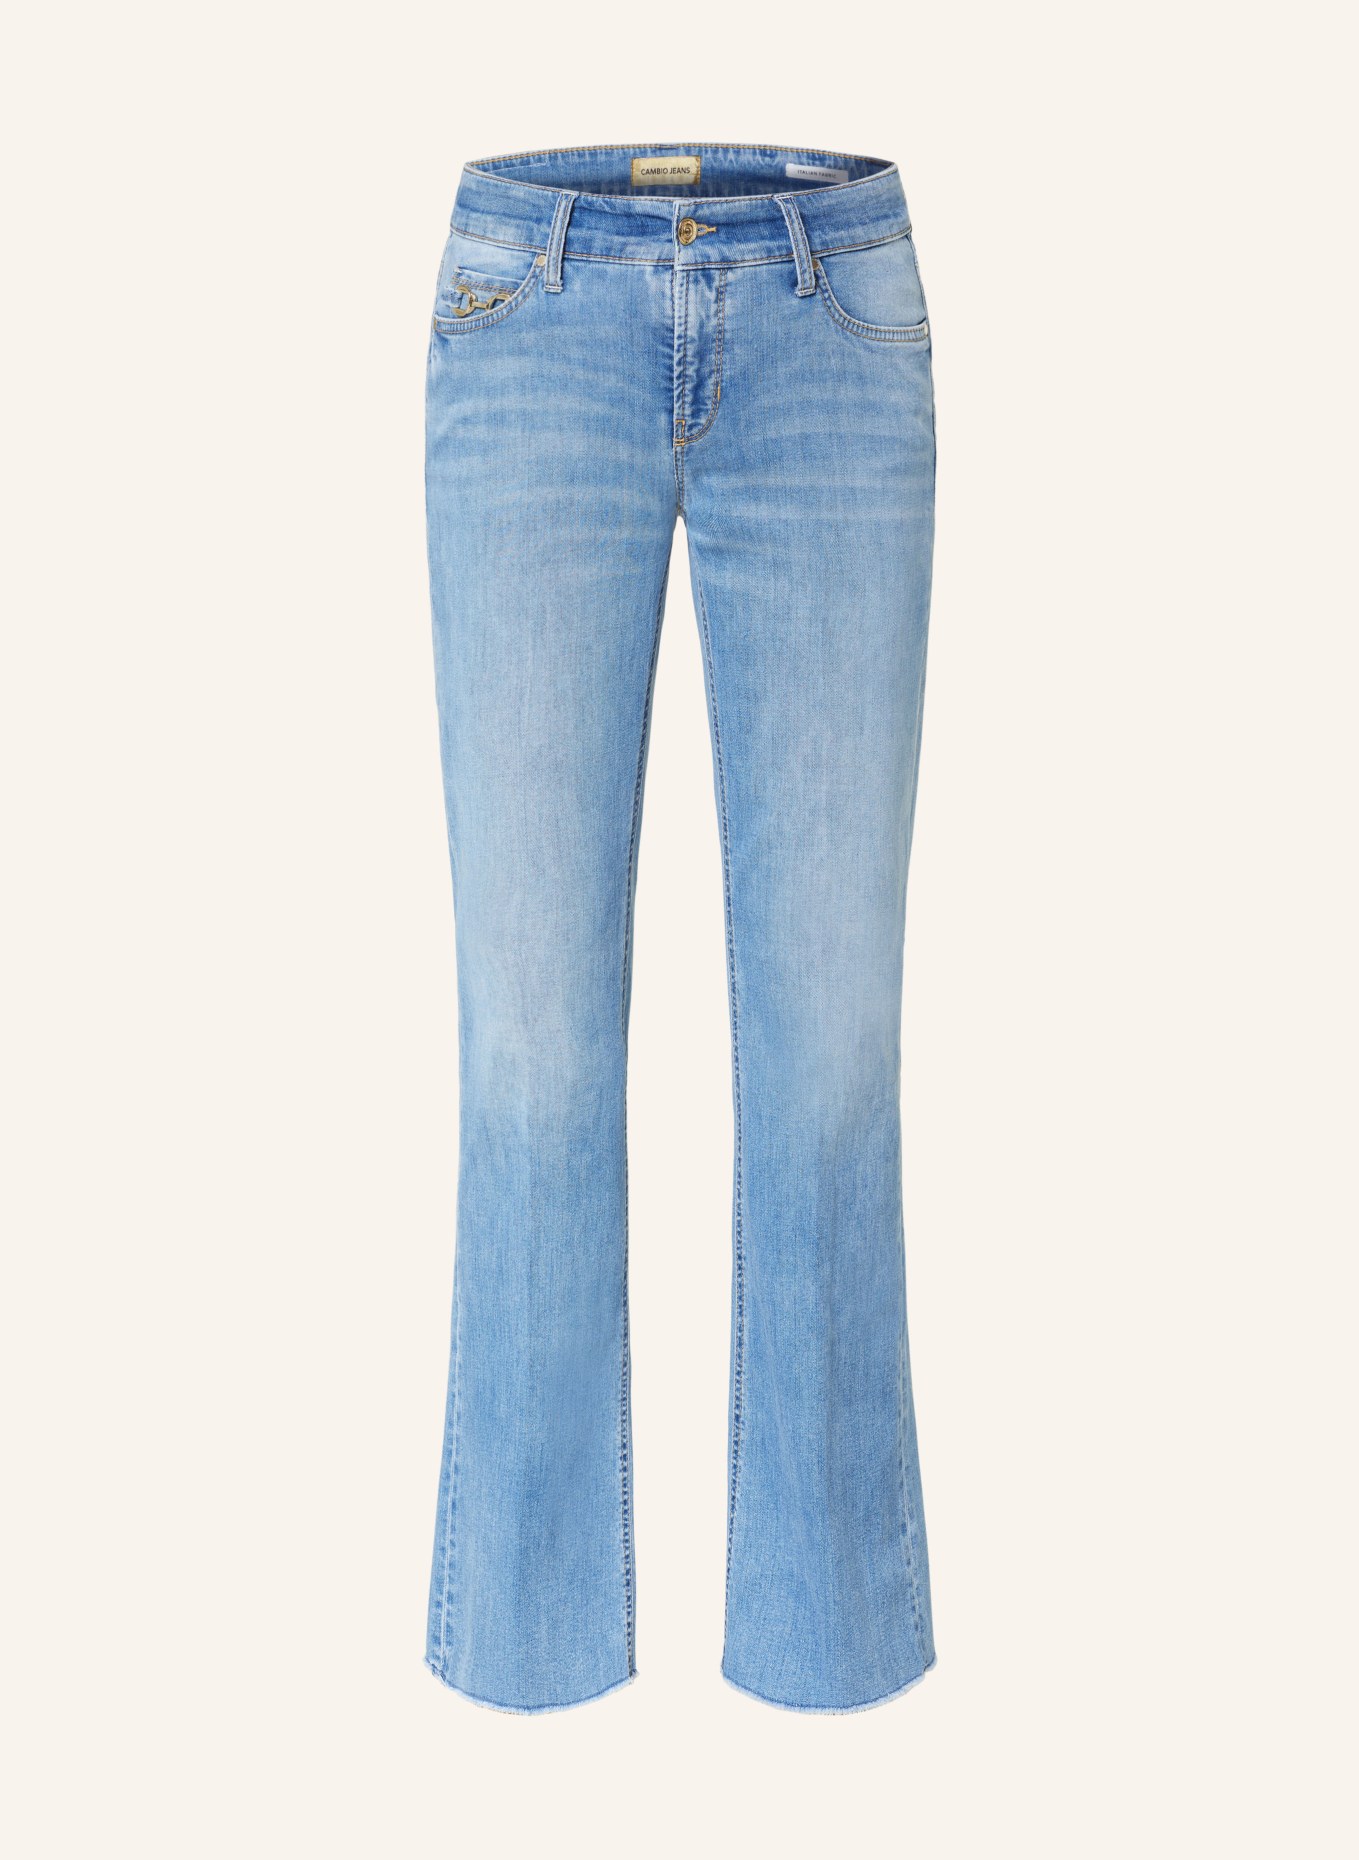 CAMBIO Flared Jeans PARIS, Farbe: 5228 sunny mid used fringed (Bild 1)